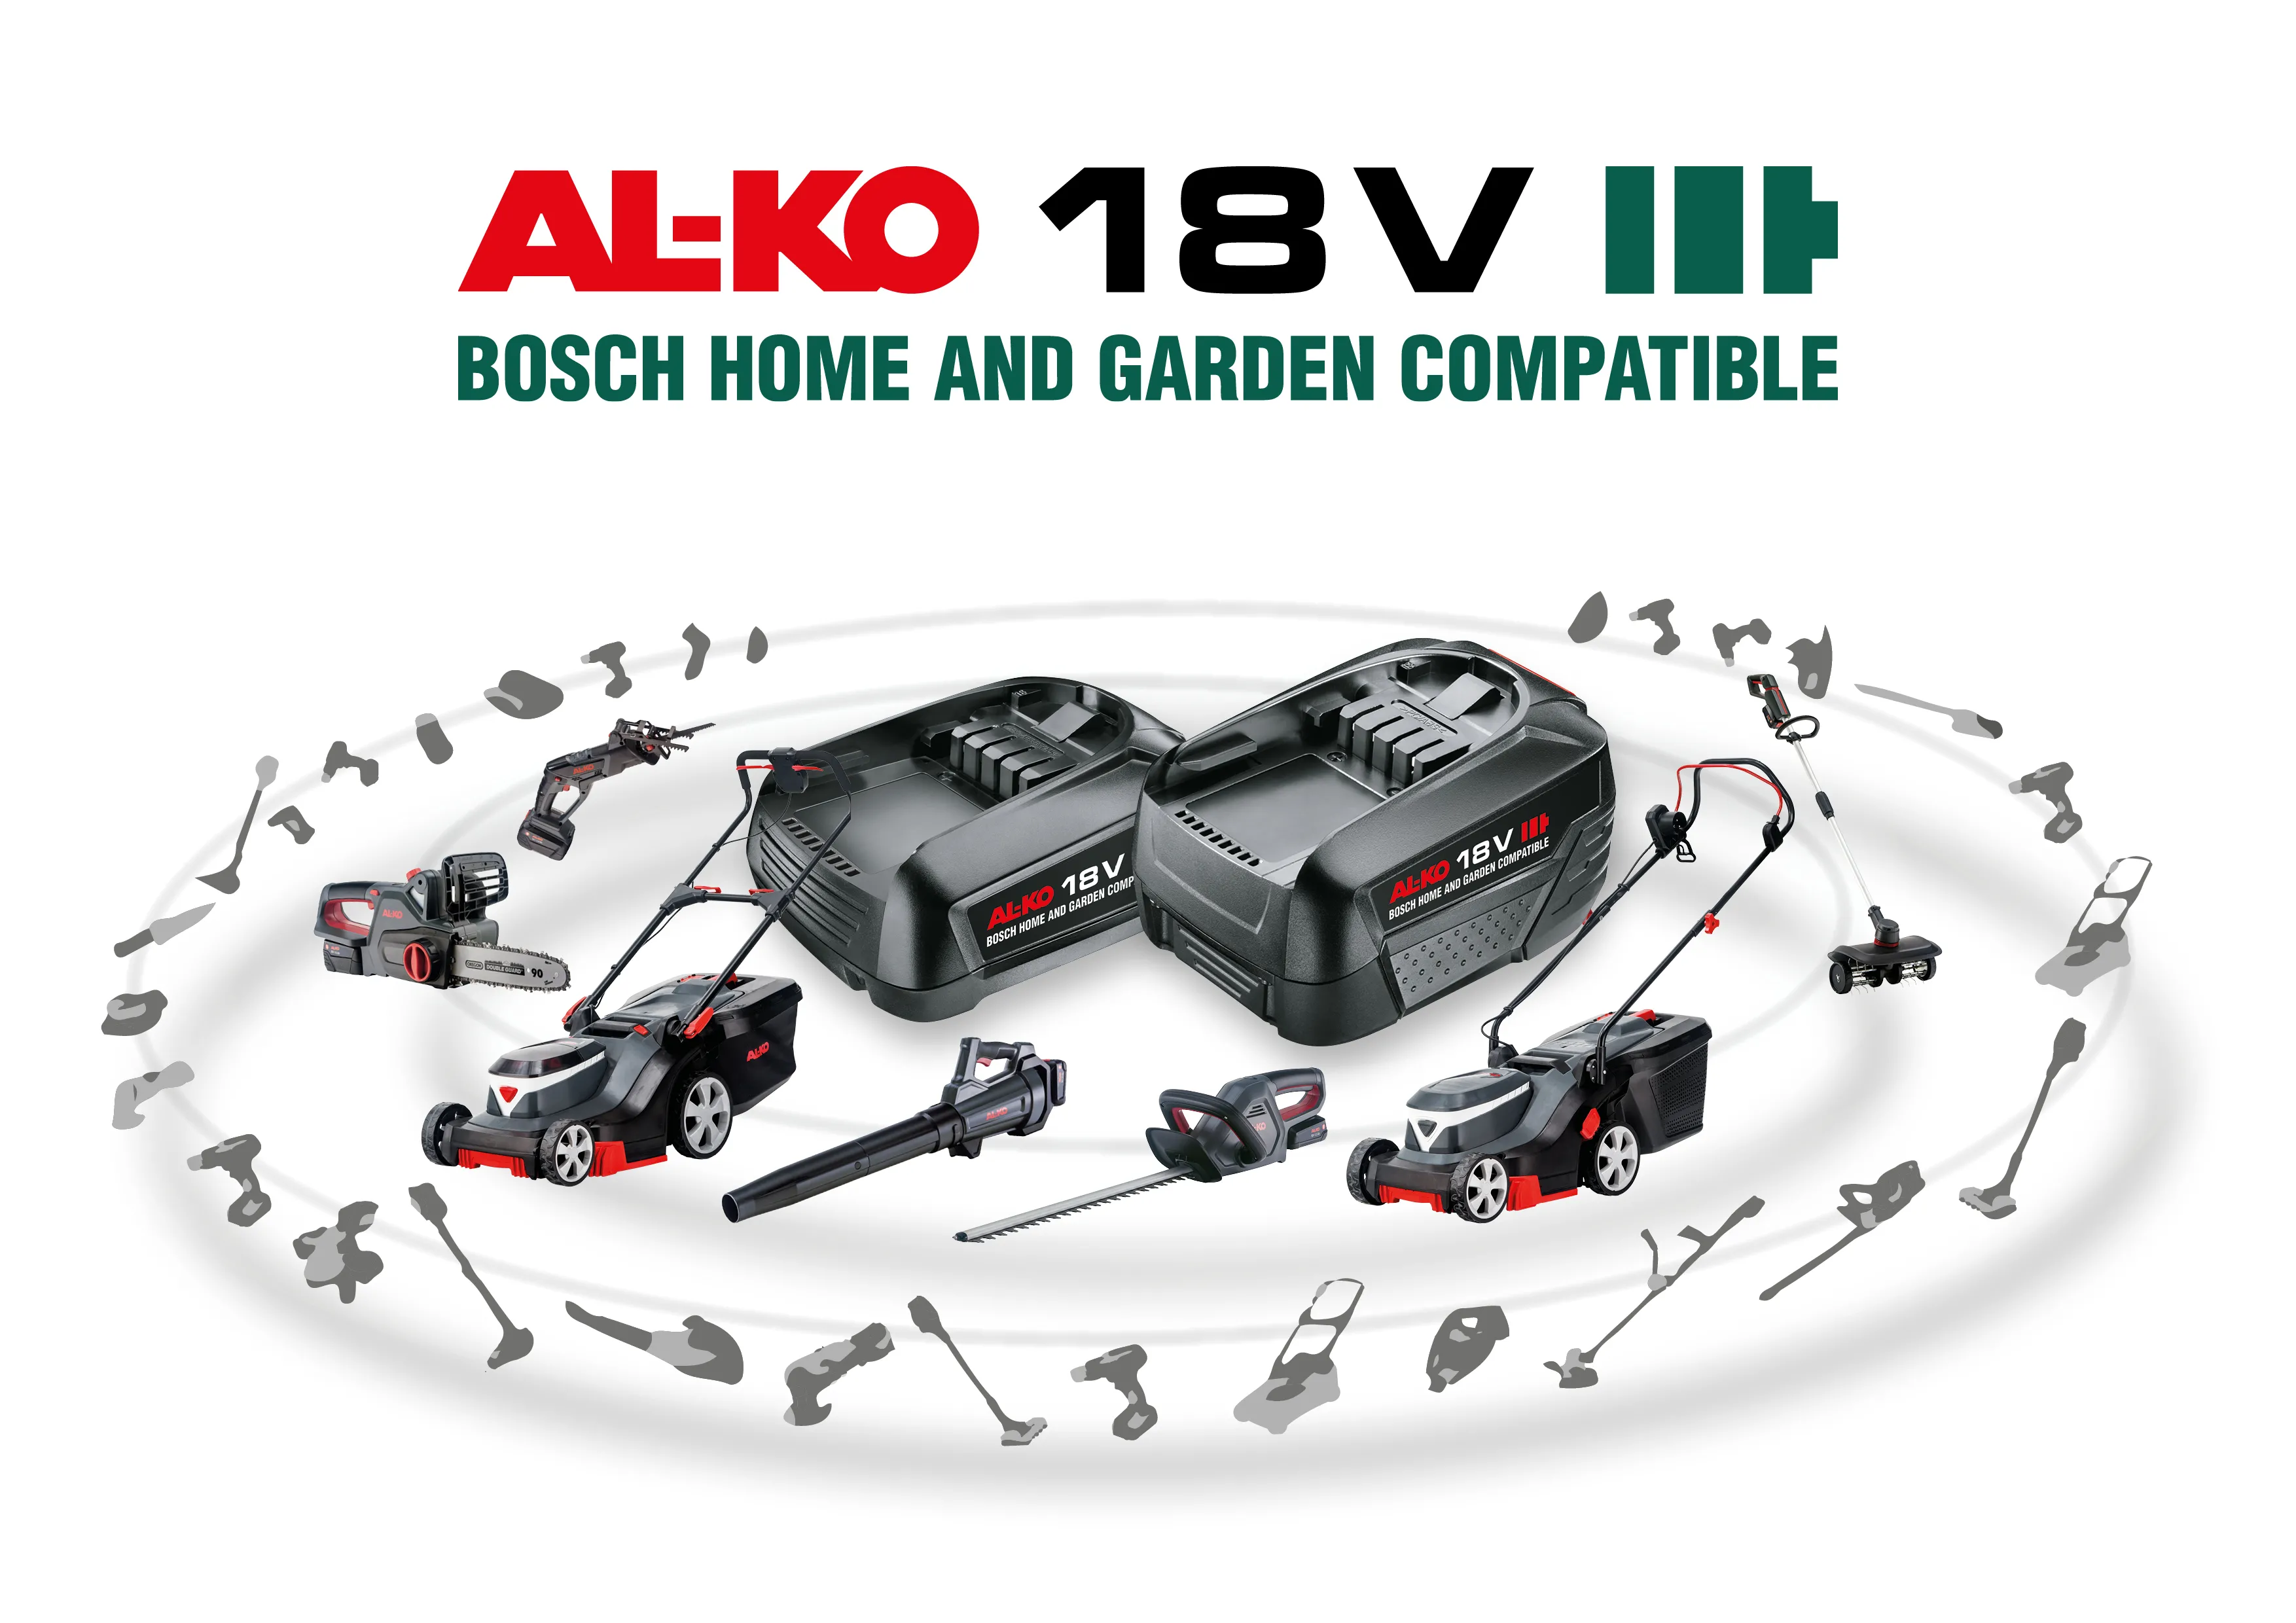 AL-KO 18 V Bosch Home & Garden compatible Akku-Familie im Überblick | AL-KO Gartengeräte